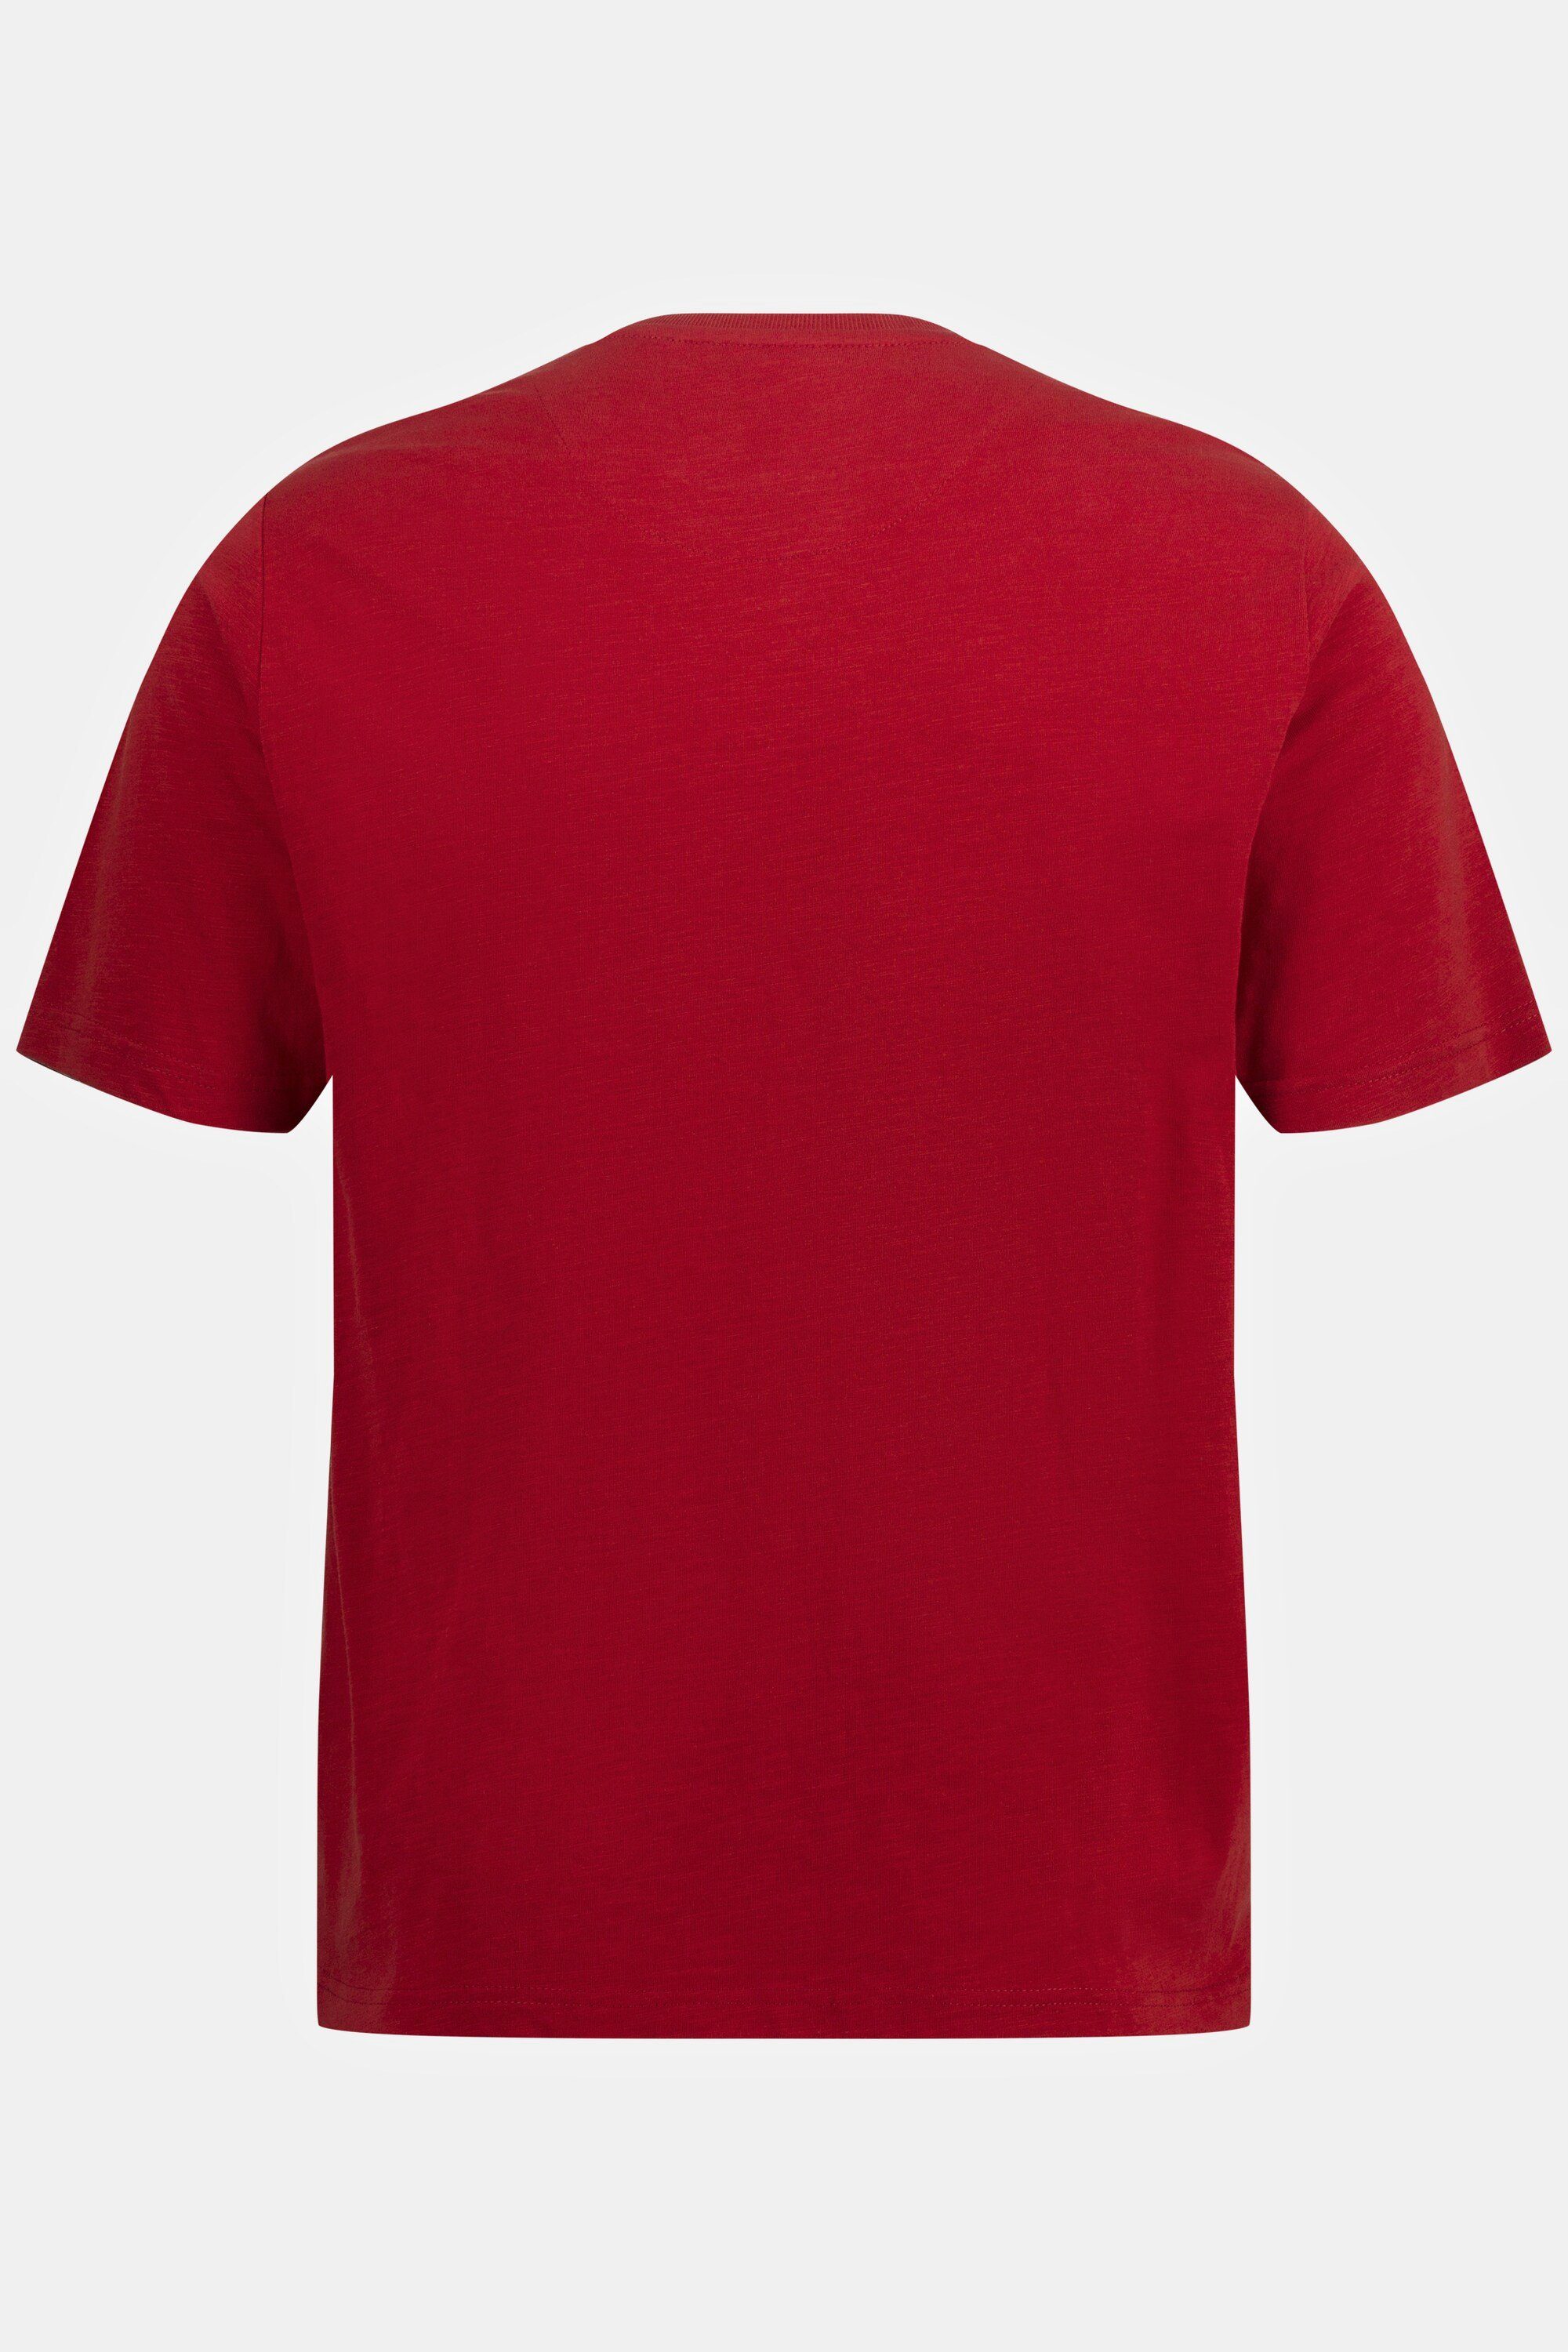 Print T-Shirt Halbarm T-Shirt Rundhals Crack JP1880 Flammjersey